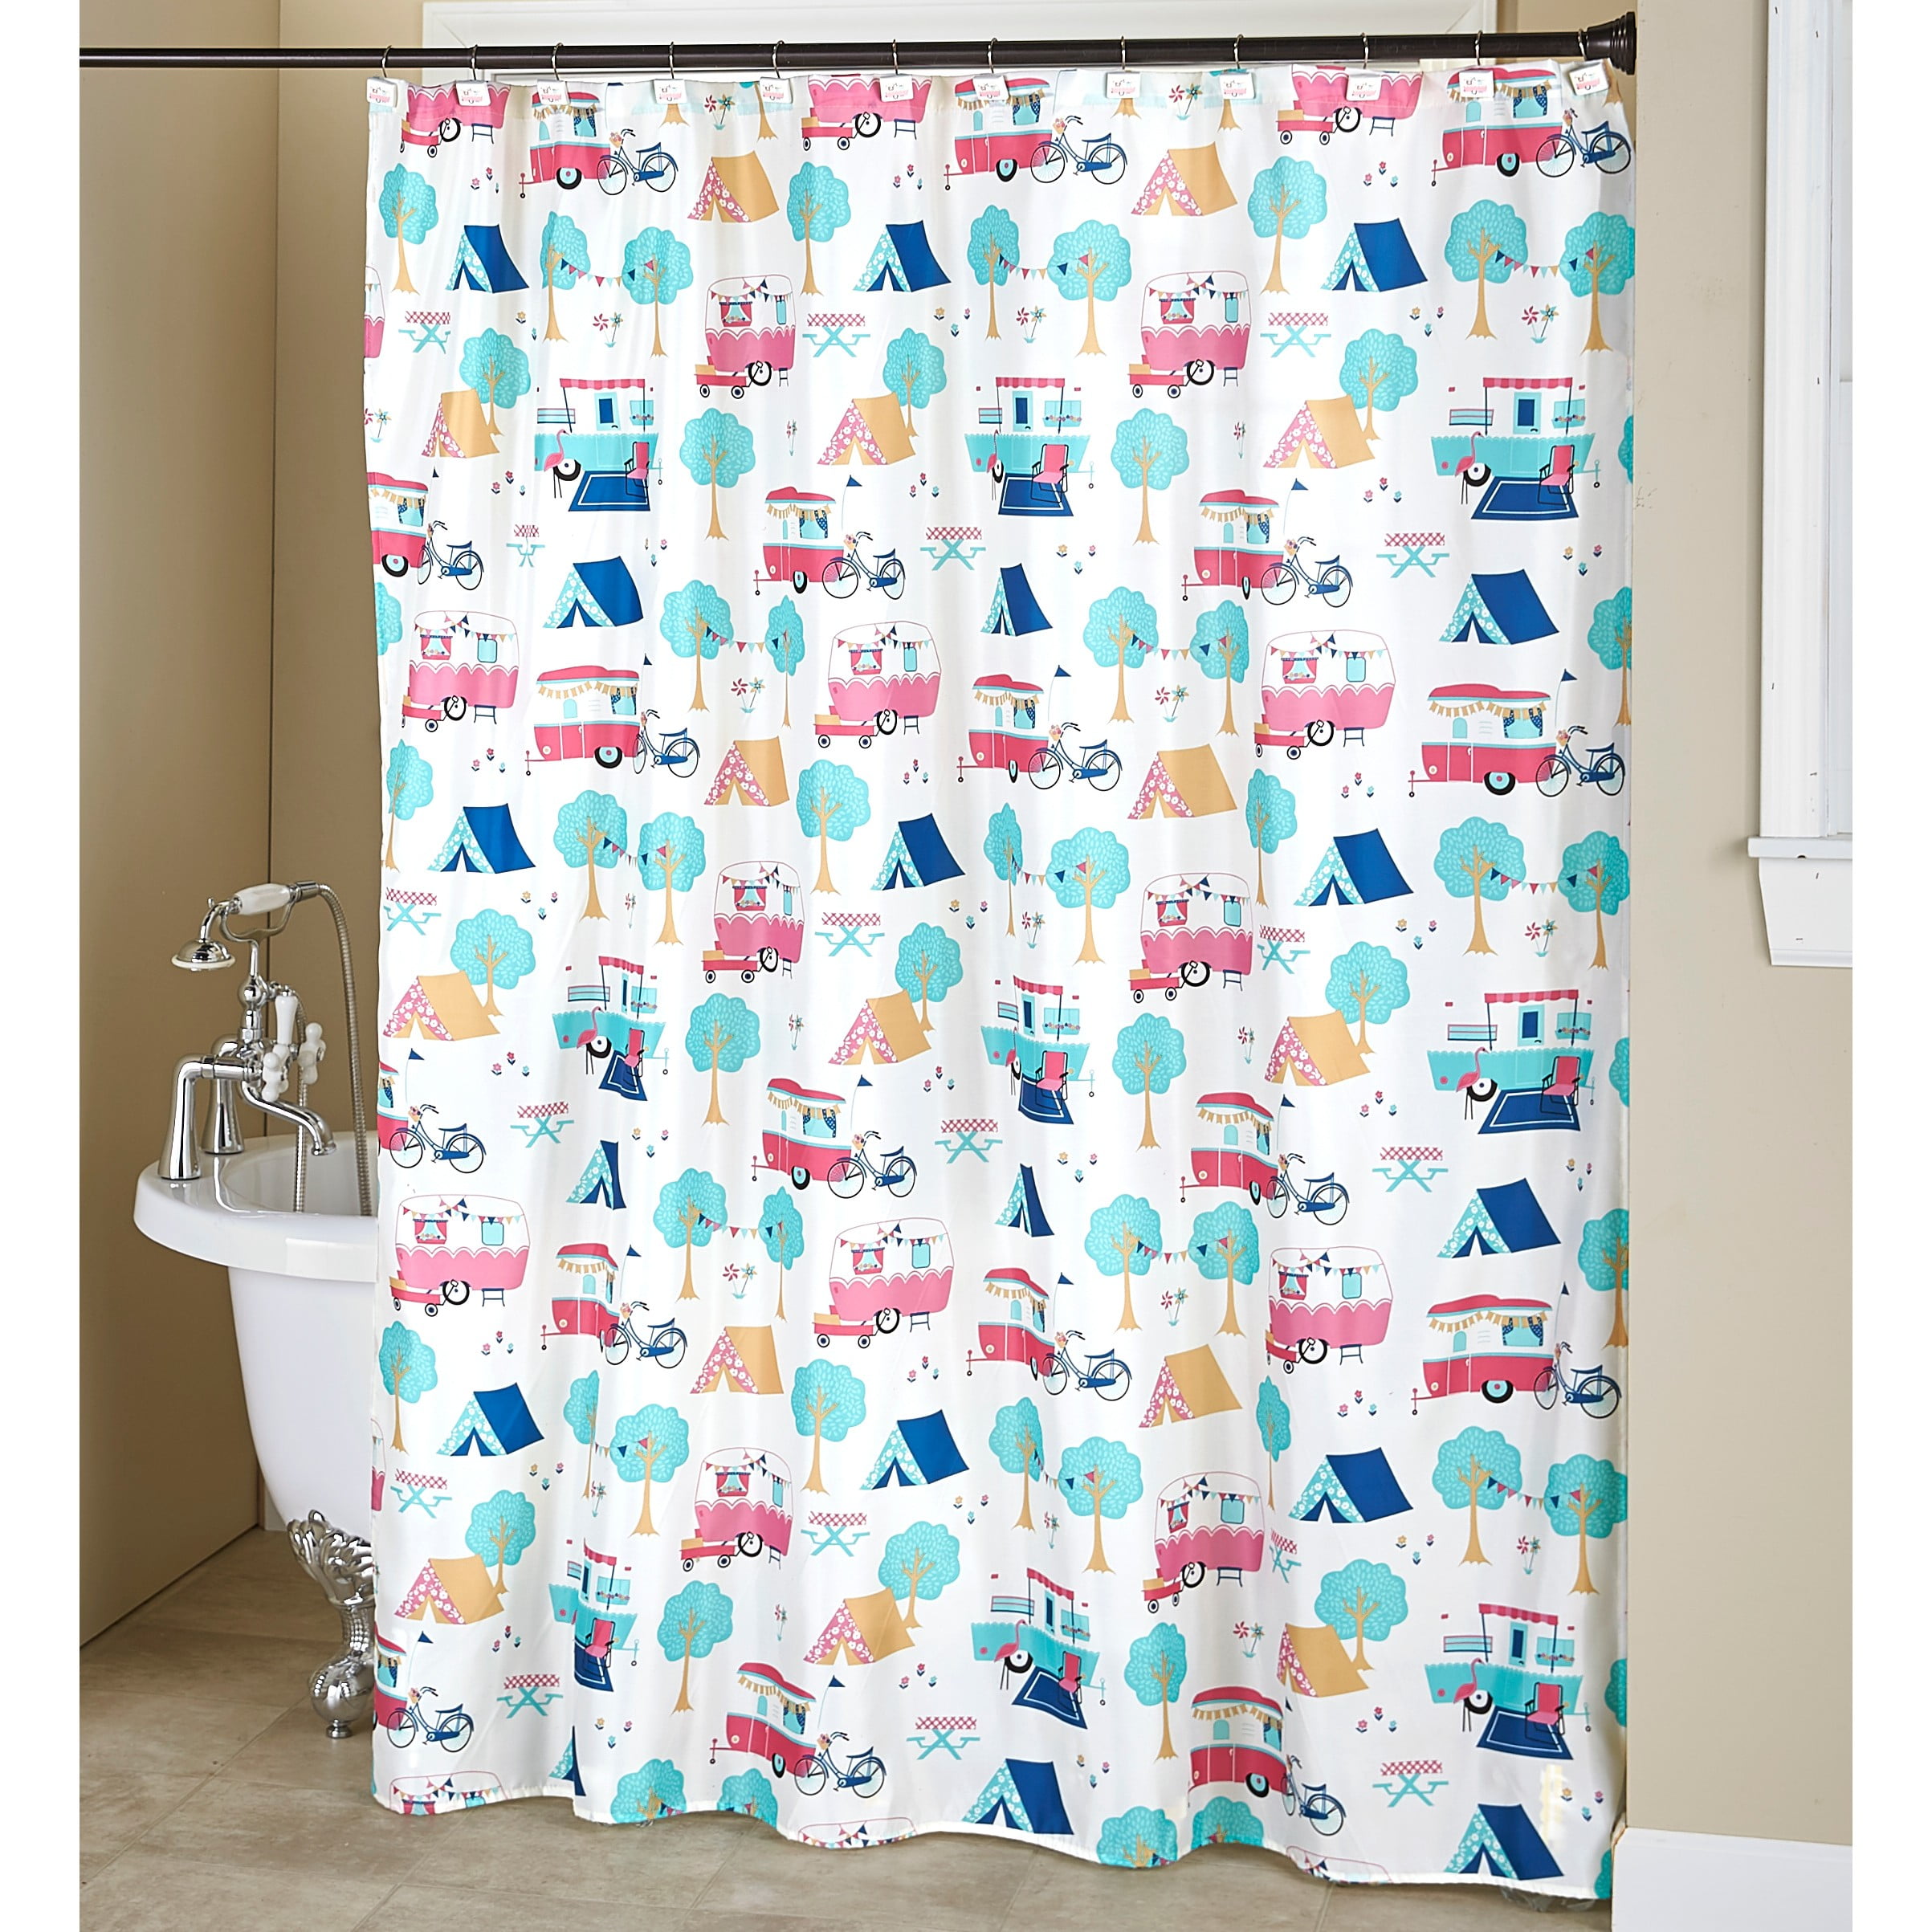 Bathing Cat Shower Curtain Blue Funny Peeking at The Cat Pattern Bath Curtain 